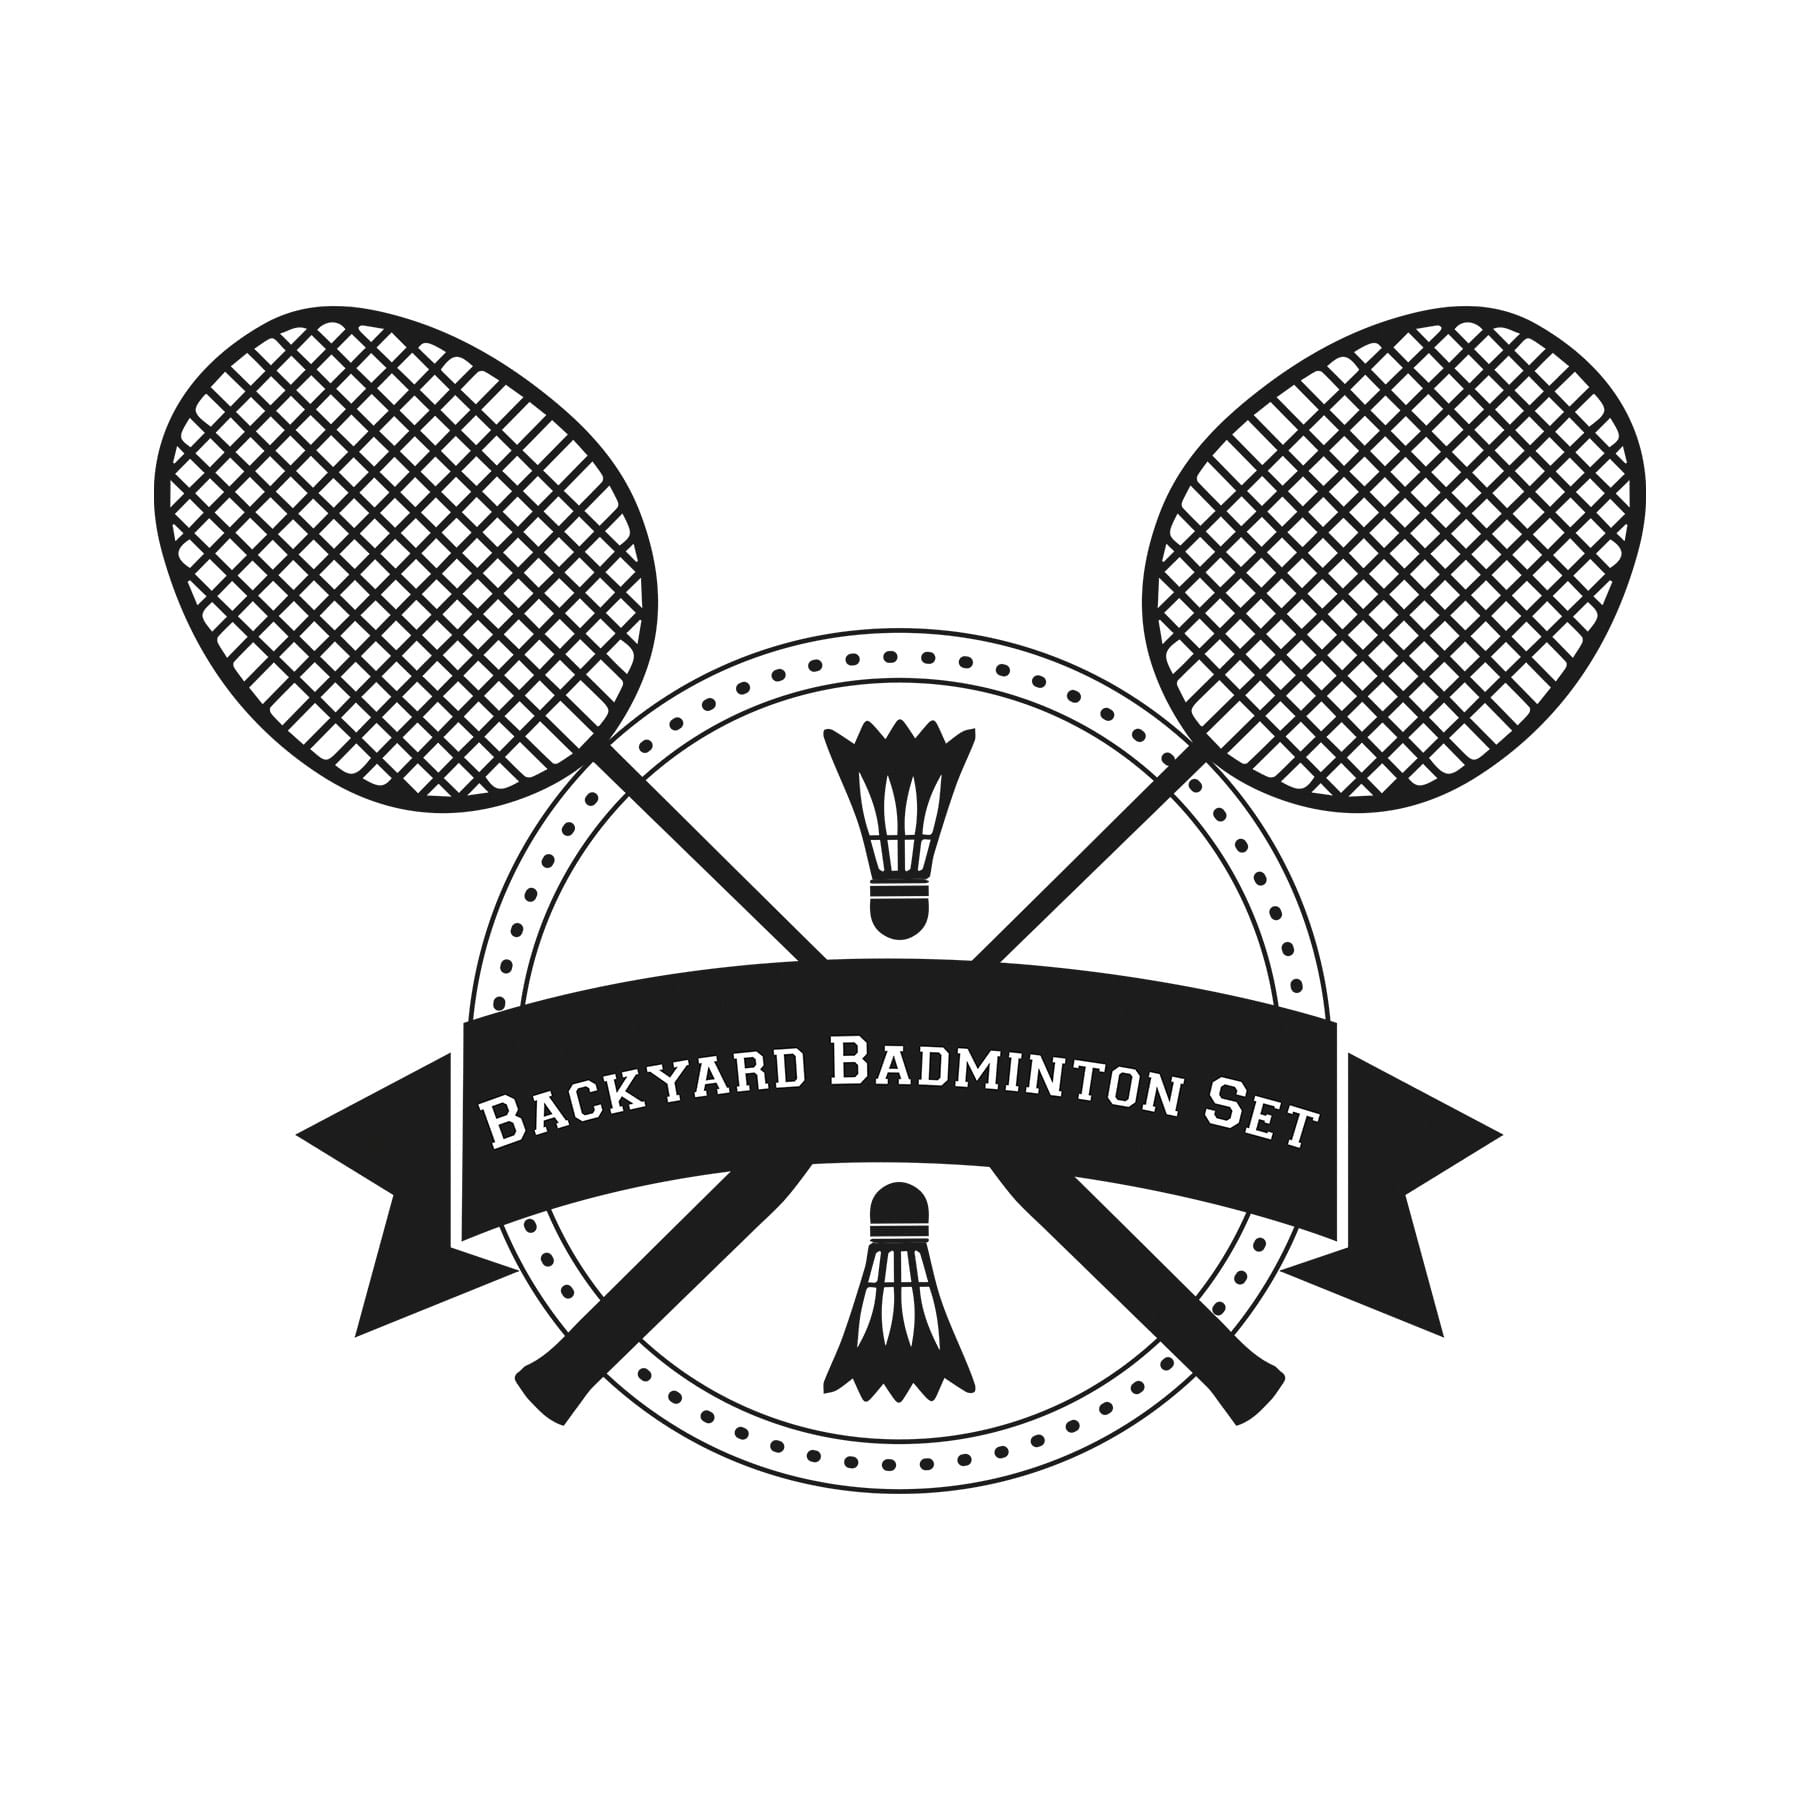 bbybs_backyard_badminton_set_logo-3.jpg